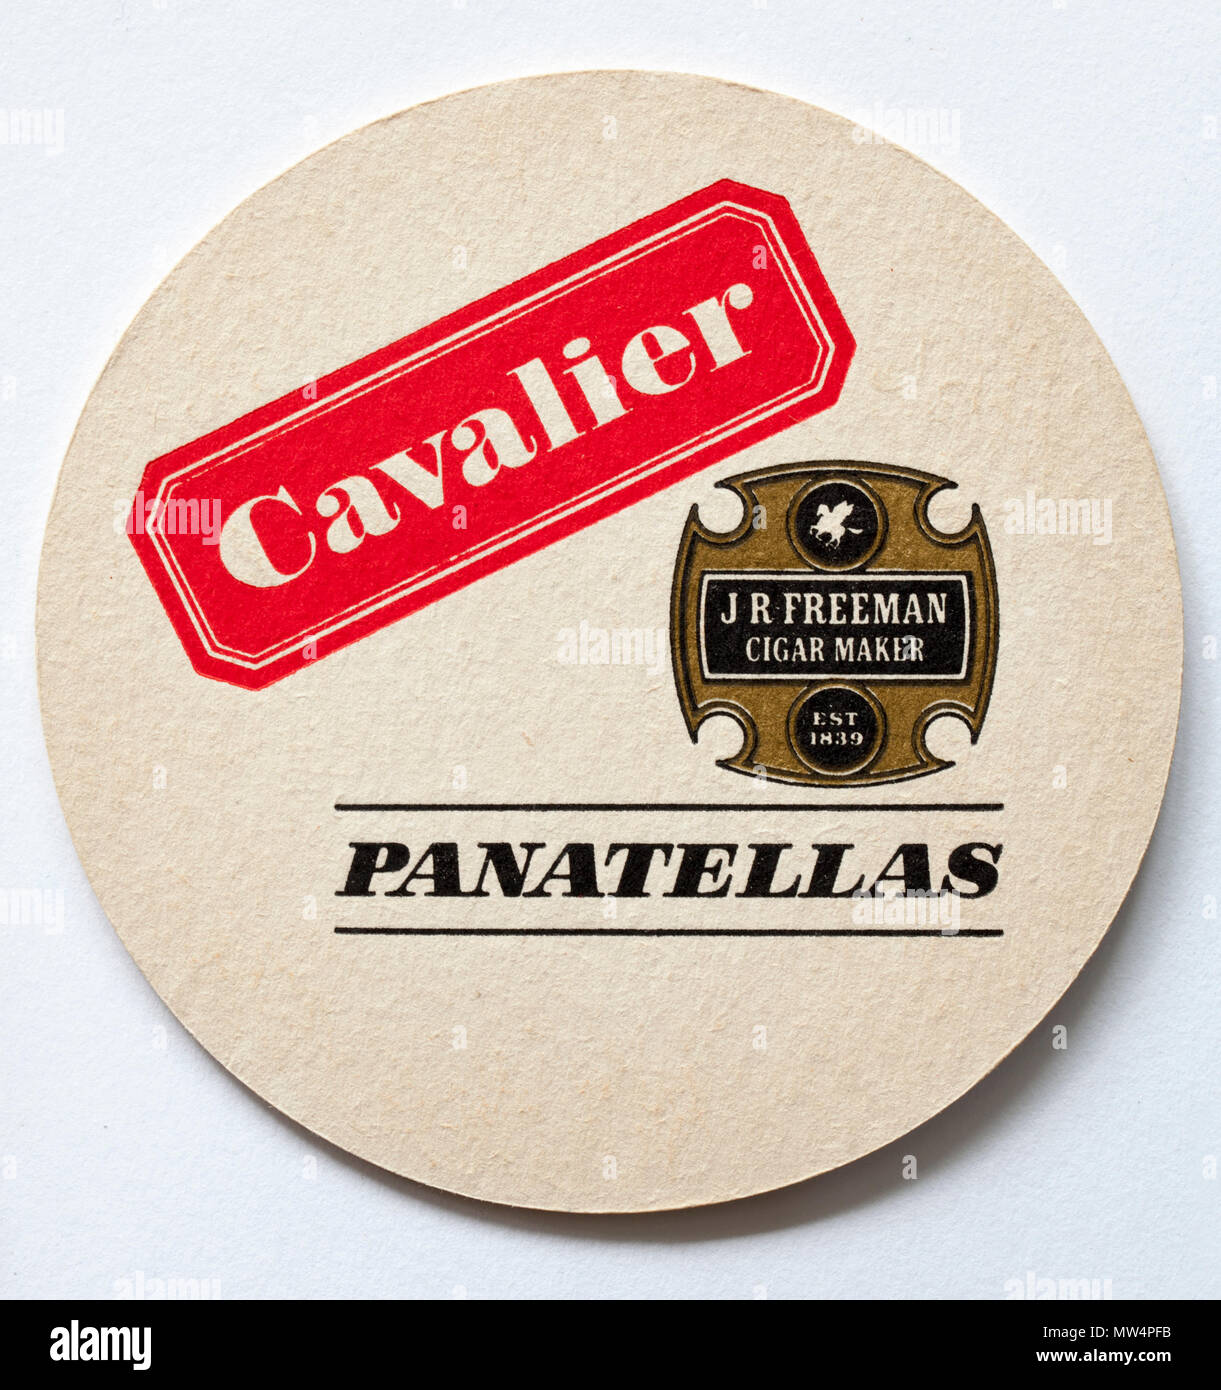 Old Vintage British Beer Mat Advertising Cavalier Panatella Cigars Stock Photo